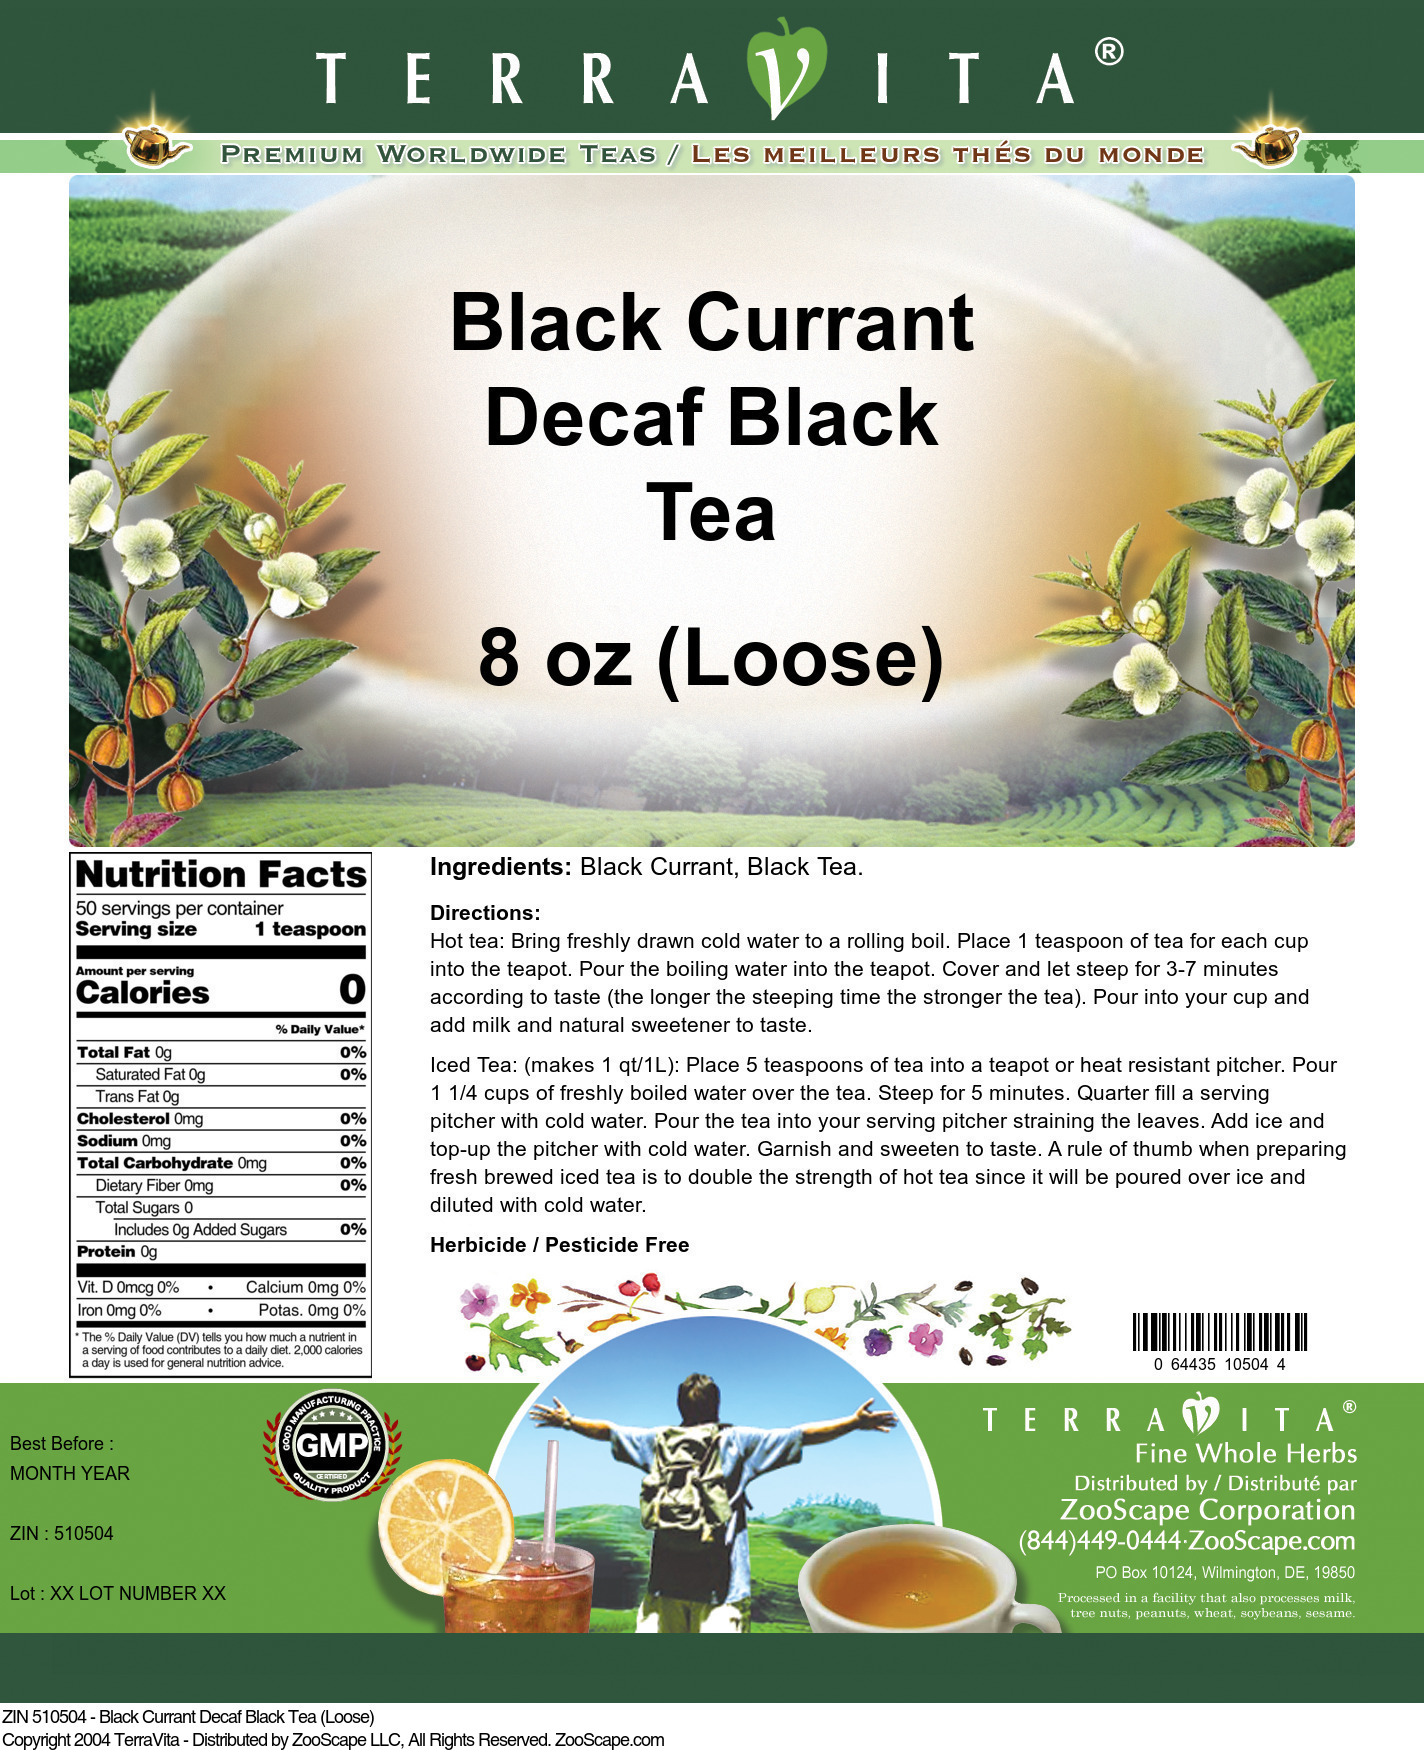 Black Currant Decaf Black Tea (Loose) - Label